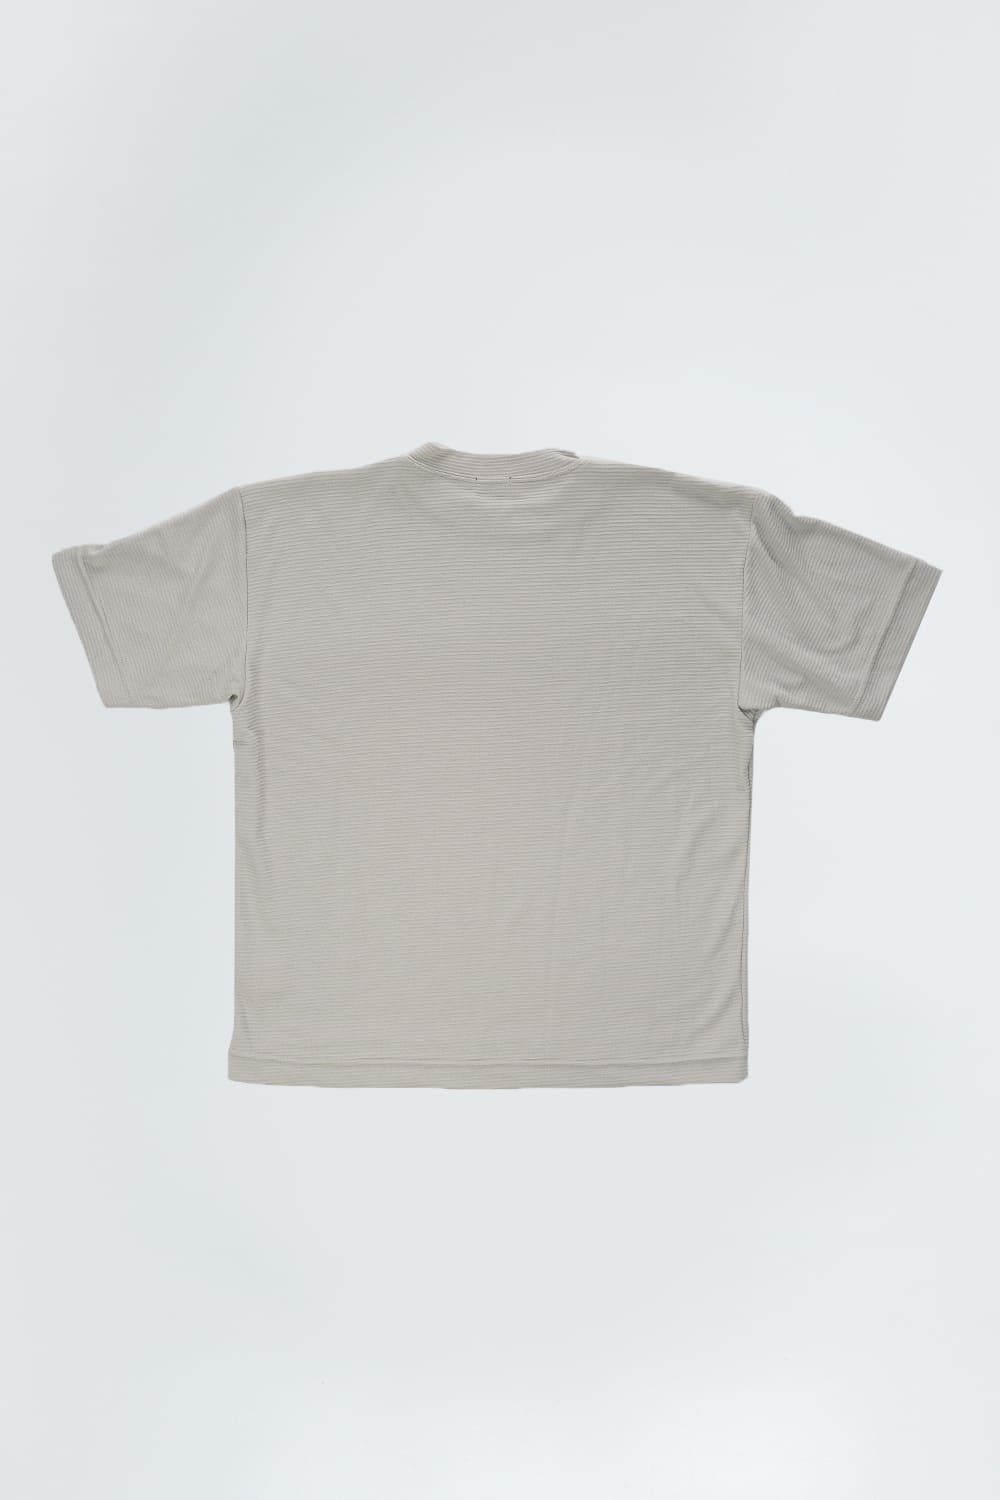 Basics Texture t-shirt  - 8306 SAND